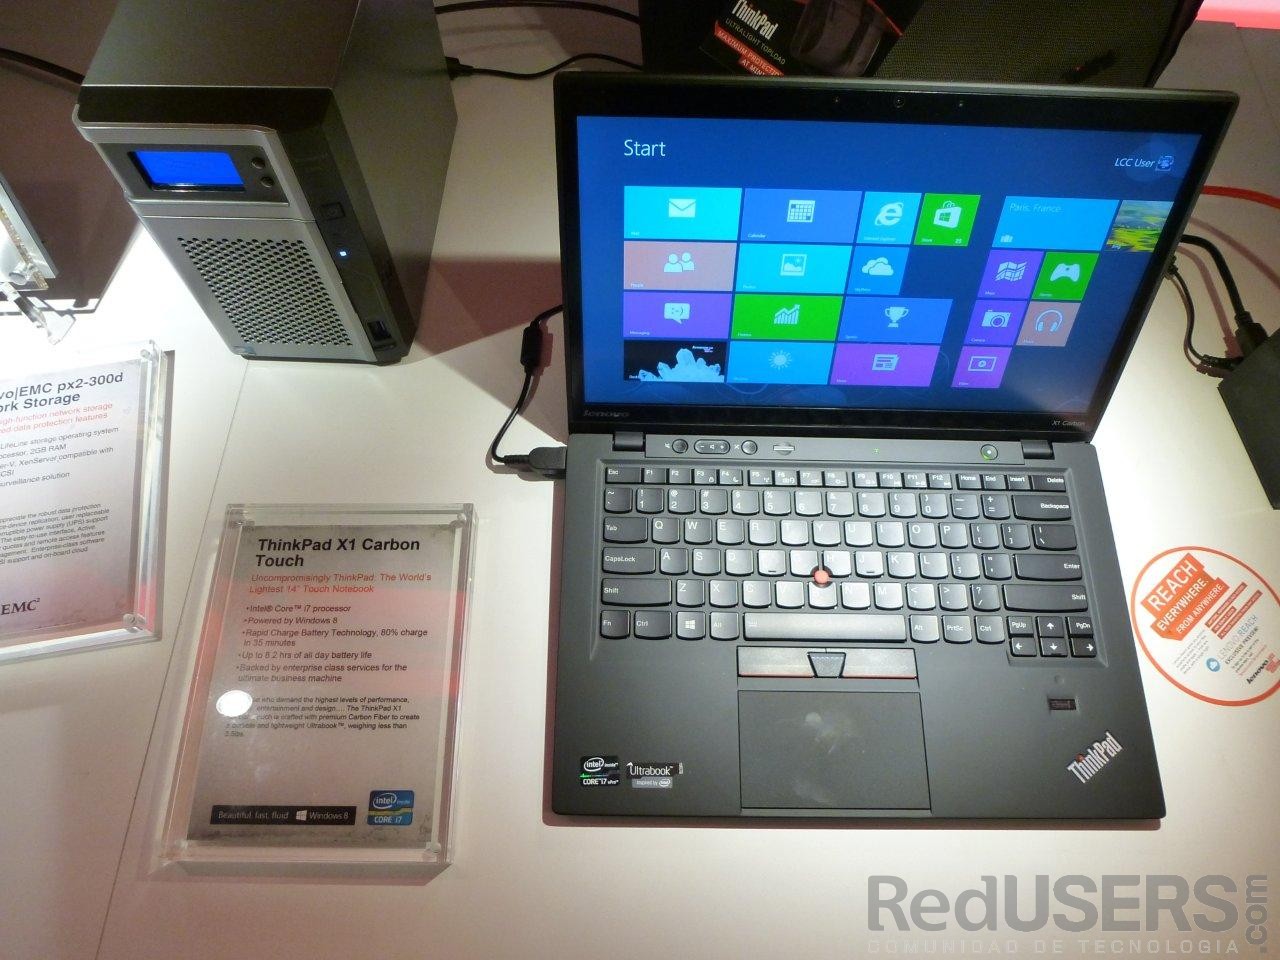 La ThinkPad X1 carbon Touch presentada meses antes del inicio de la feria